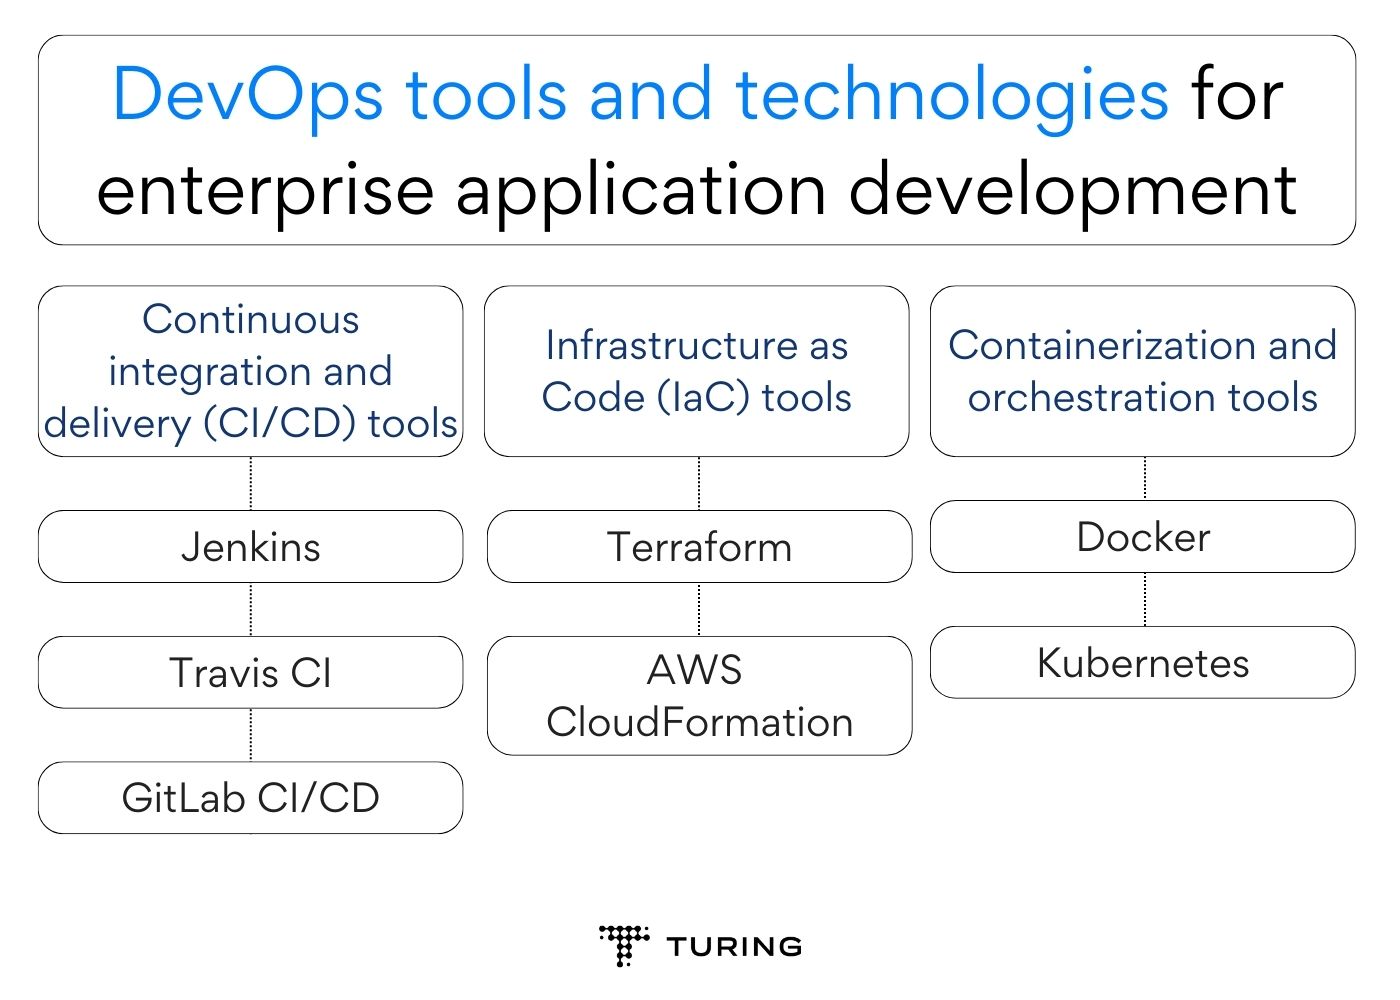 DevOps tools and technologies for enterprise application development